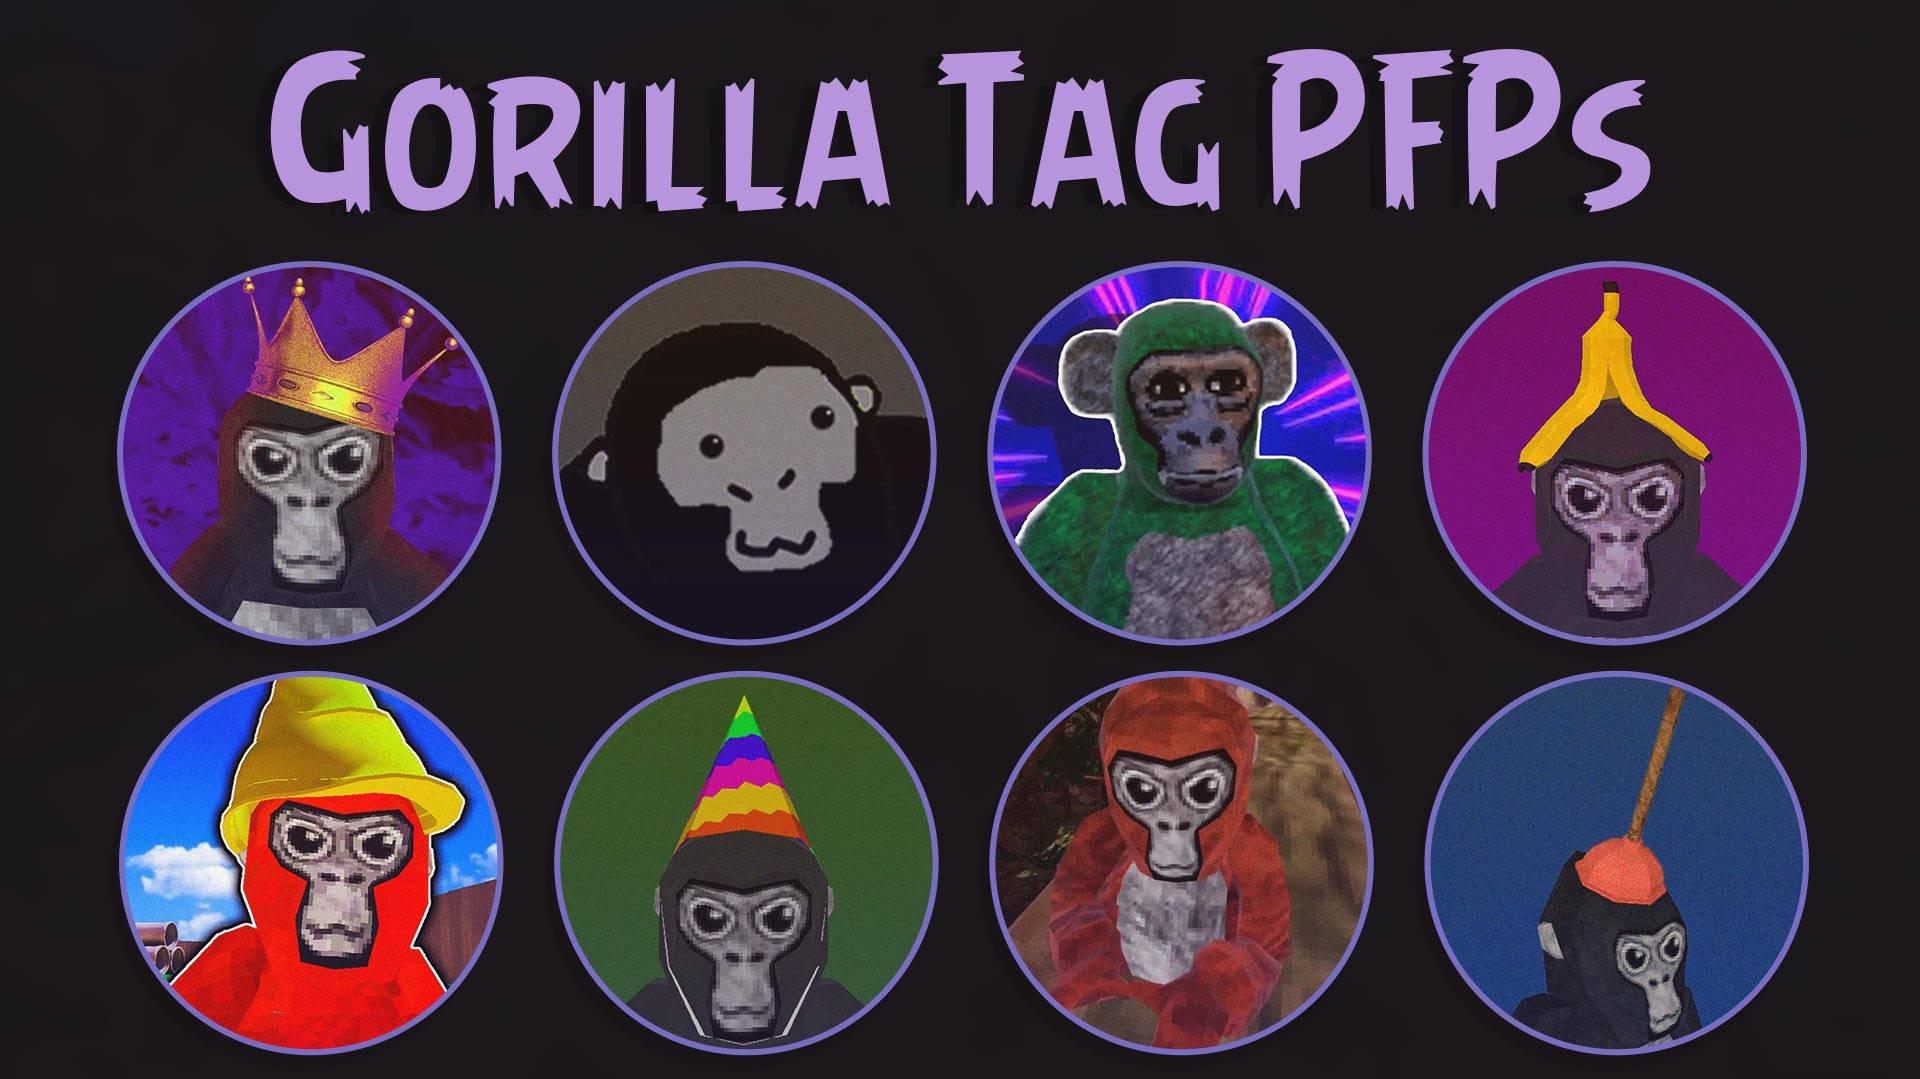  Gorilla Tag Pfp Wallpapers